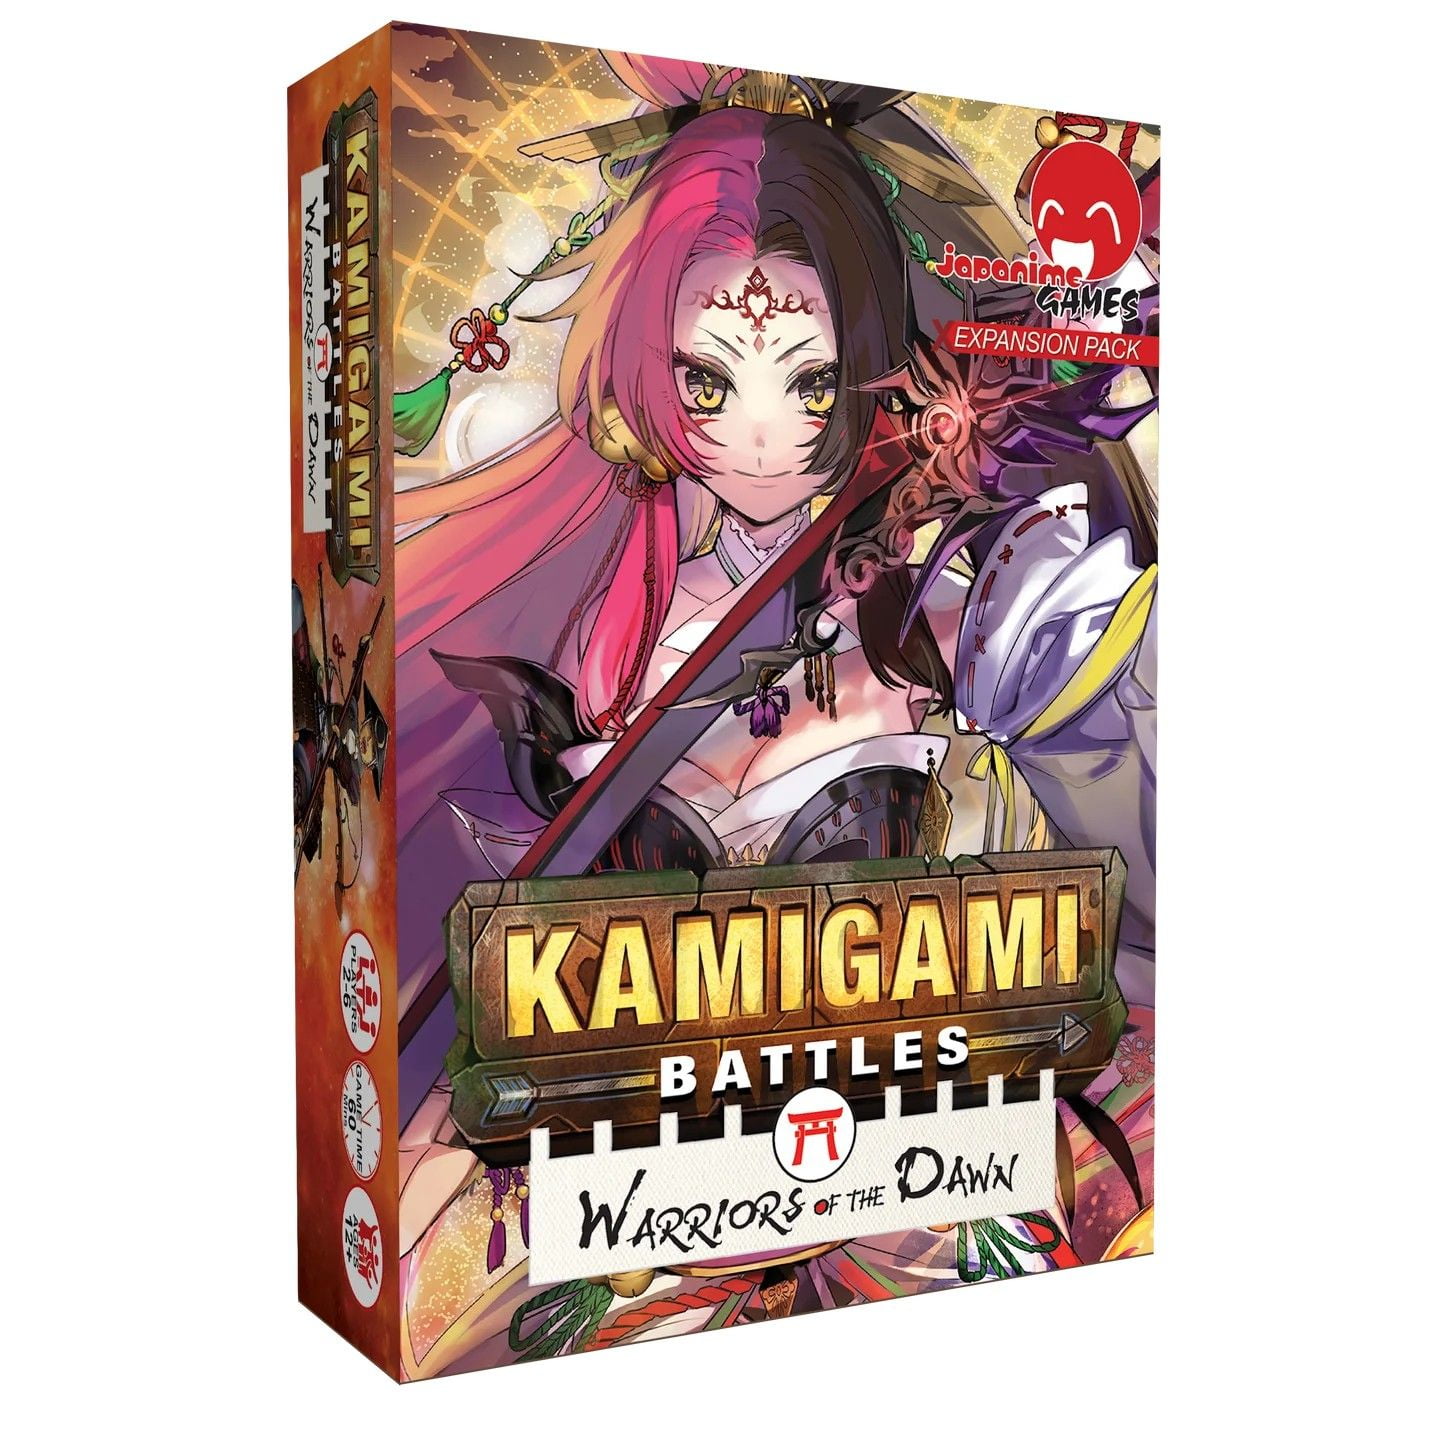 Kamigami Battles: Warriors of Dawn